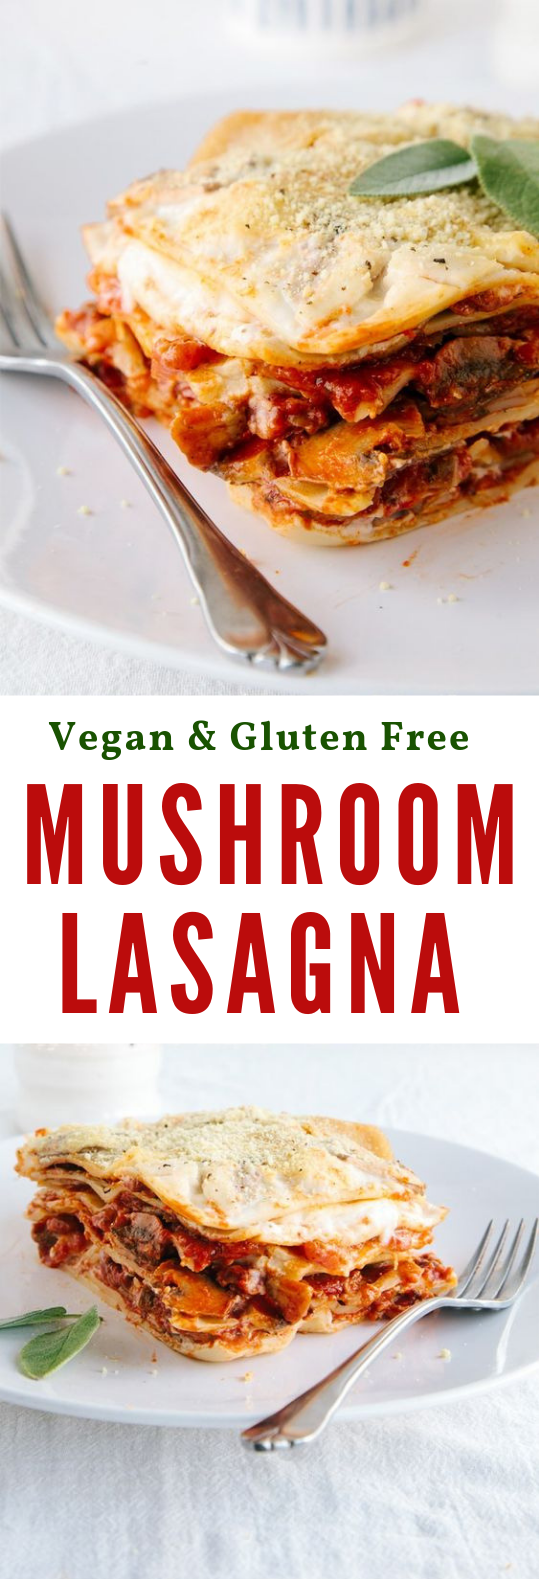 MUSHROOM LASAGNA (VEGAN + GF) #Vegan #Lasagna